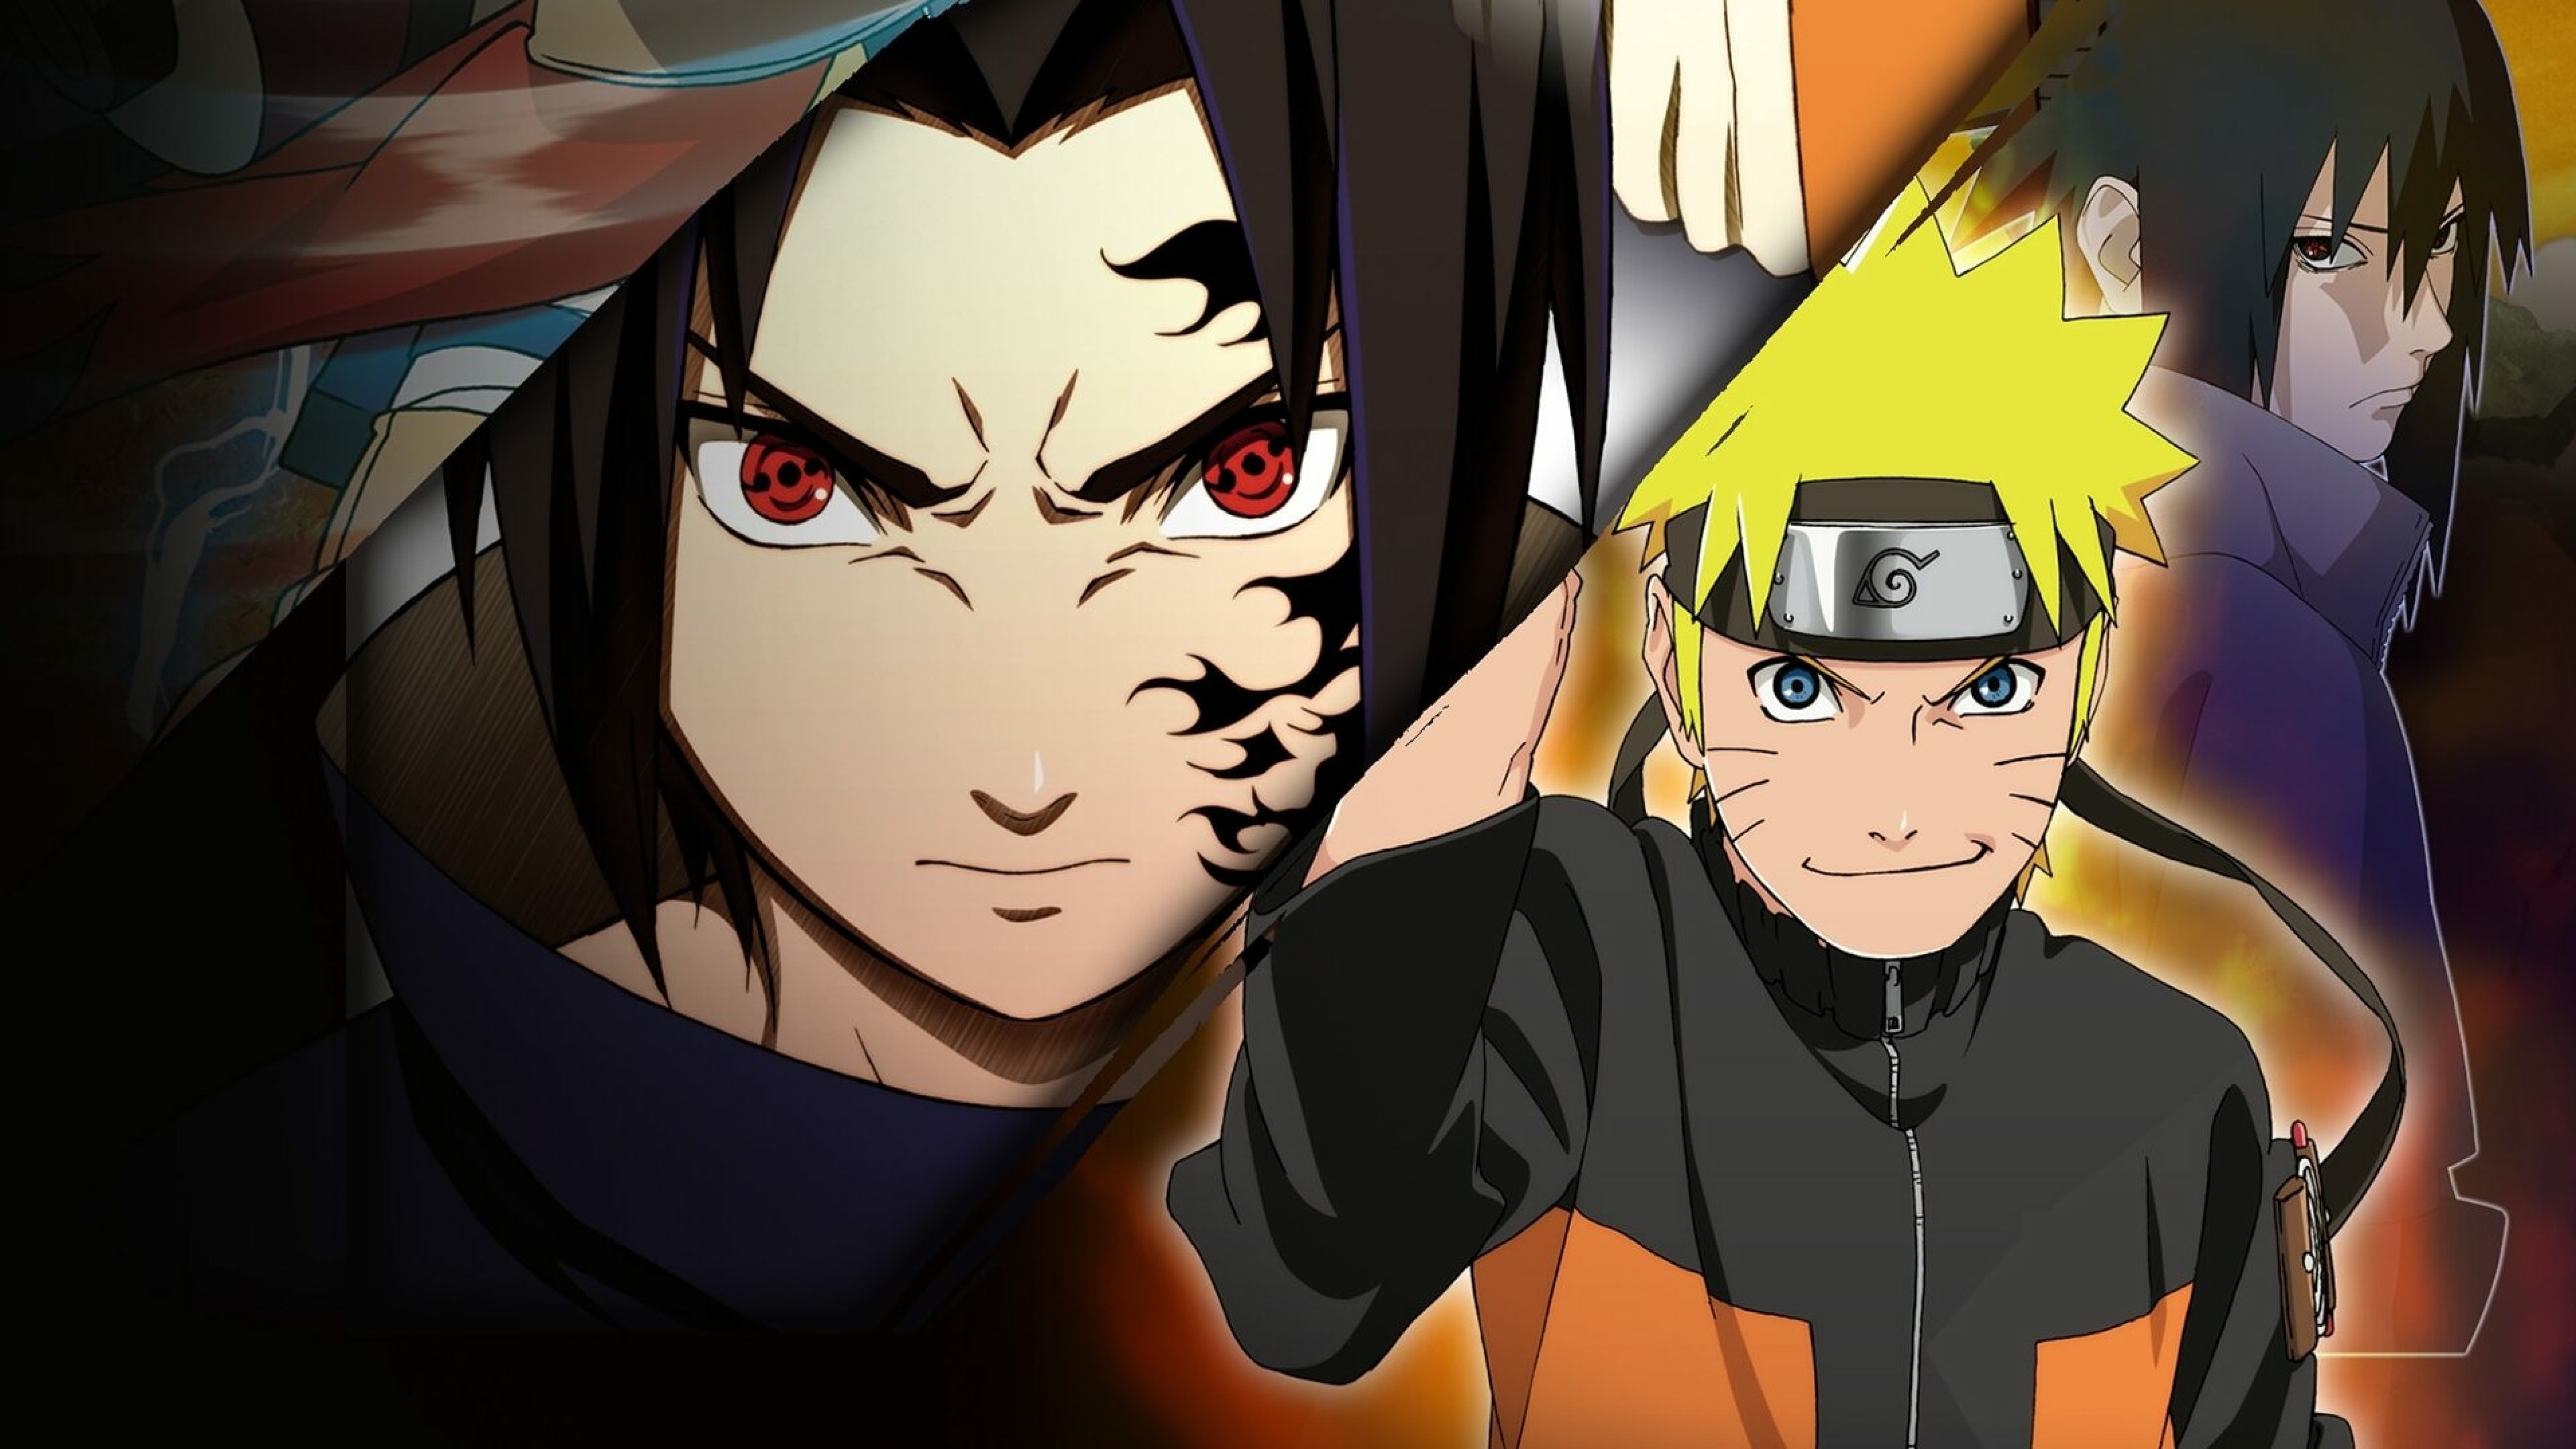 5120x2880 Naruto Uzumaki x Sasuke Uchiha HD Art 5K Wallpaper, HD Anime 4K  Wallpapers, Images, Photos and Background - Wallpapers Den